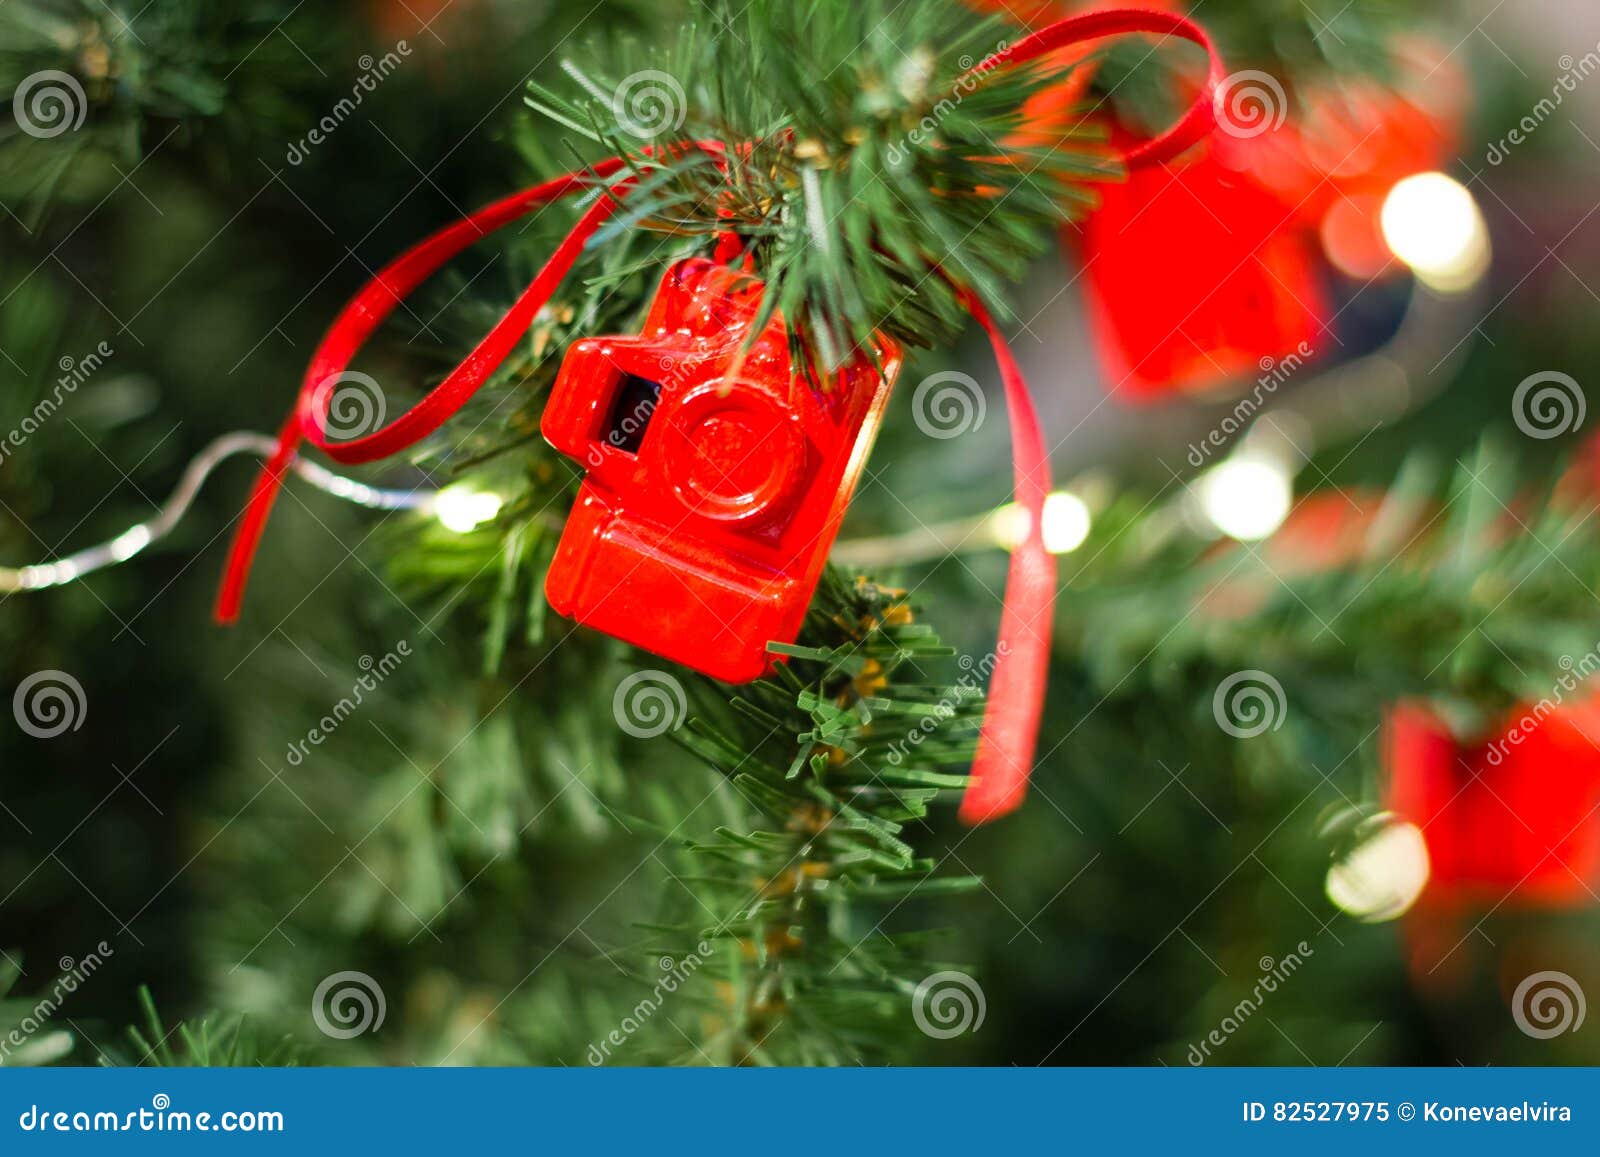 Vintage Christmas Decorations on the Christmas Tree Stock Image - Image ...